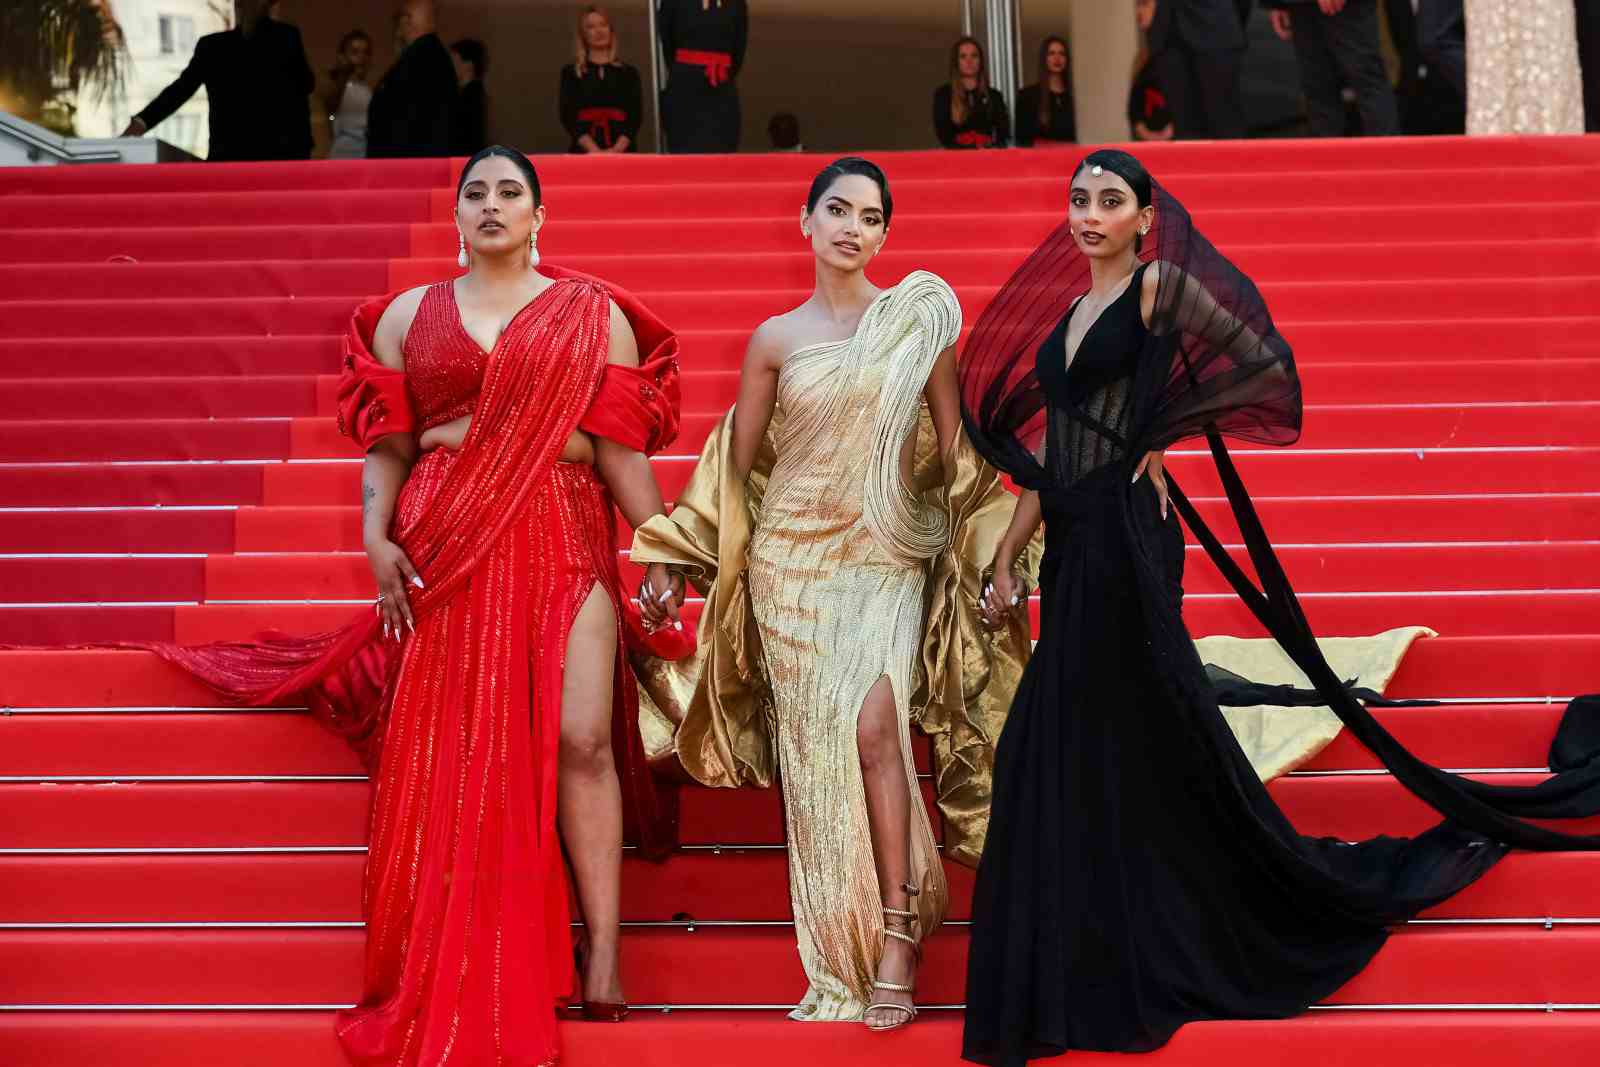 Raja Kumari, Diipa Büller-Khosla, and Dolly Singh (L-R) at Cannes 2023 (Courtesy of Diipa Büller-Khosla)